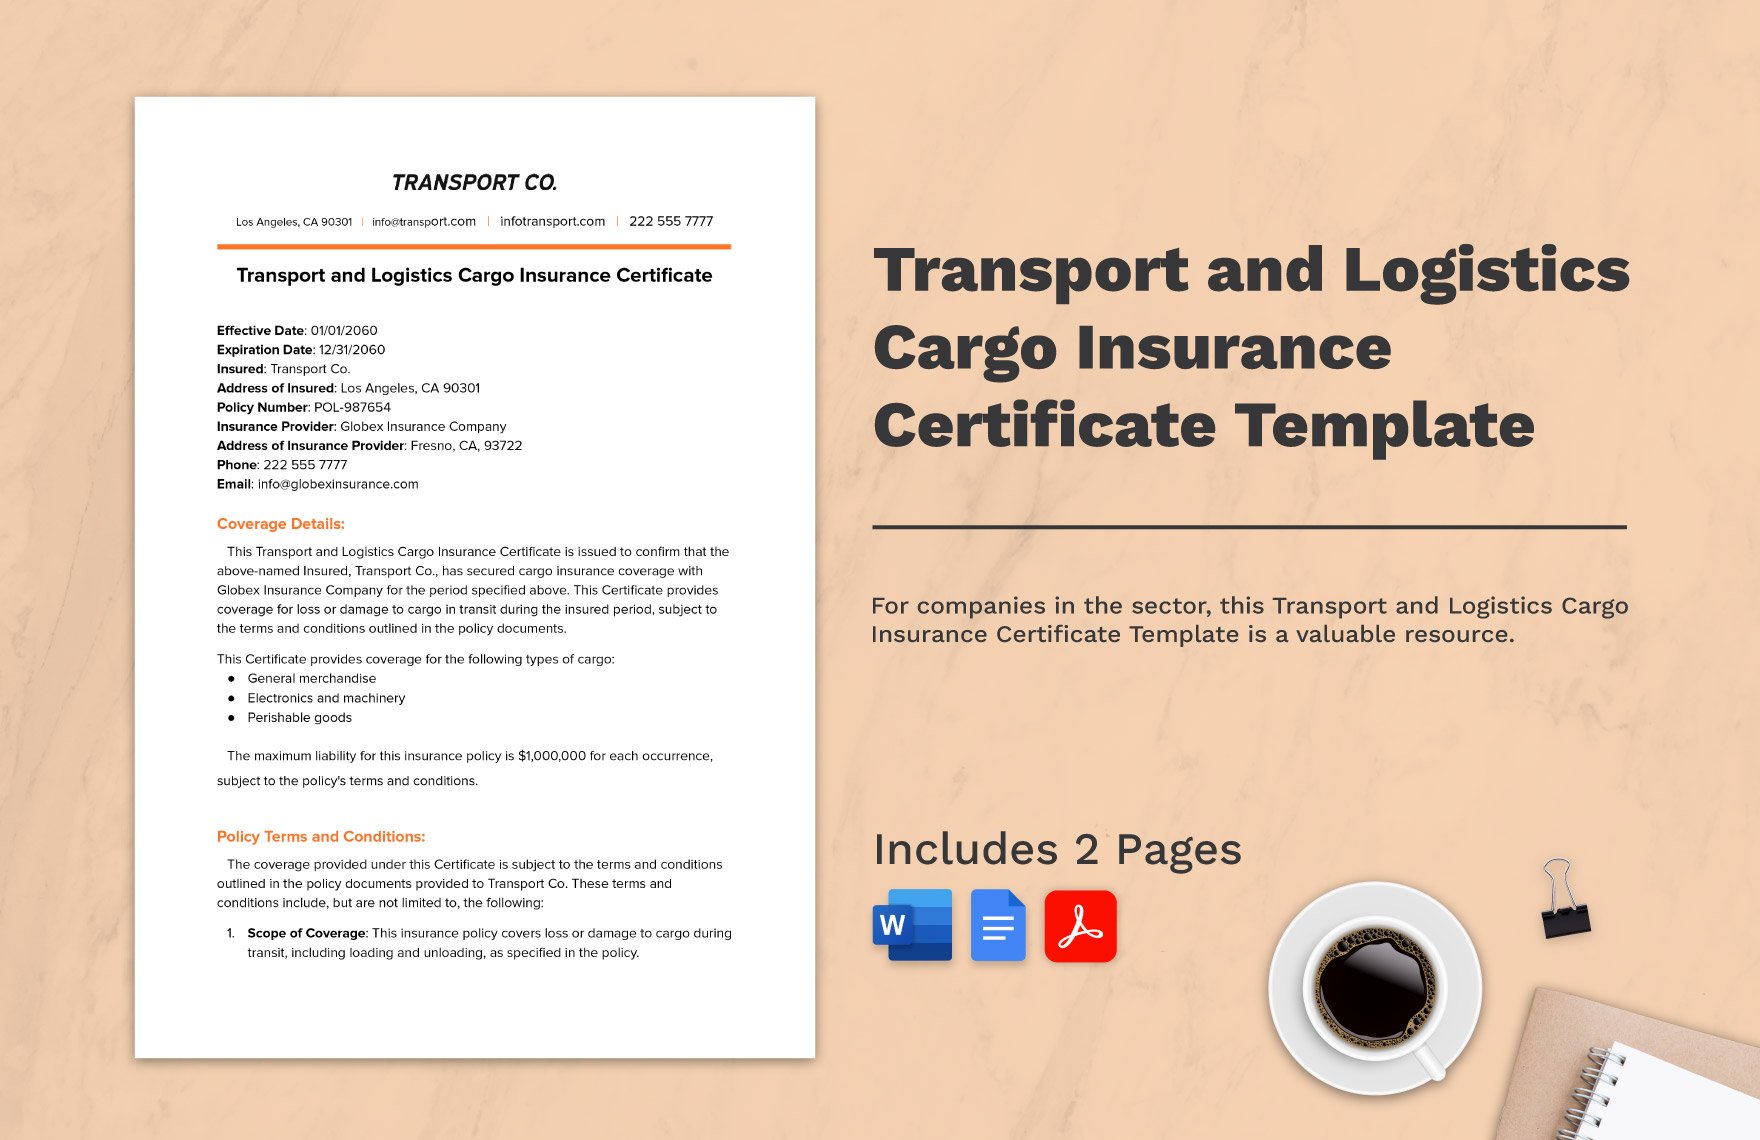 Transport and Logistics Cargo Insurance Certificate Template